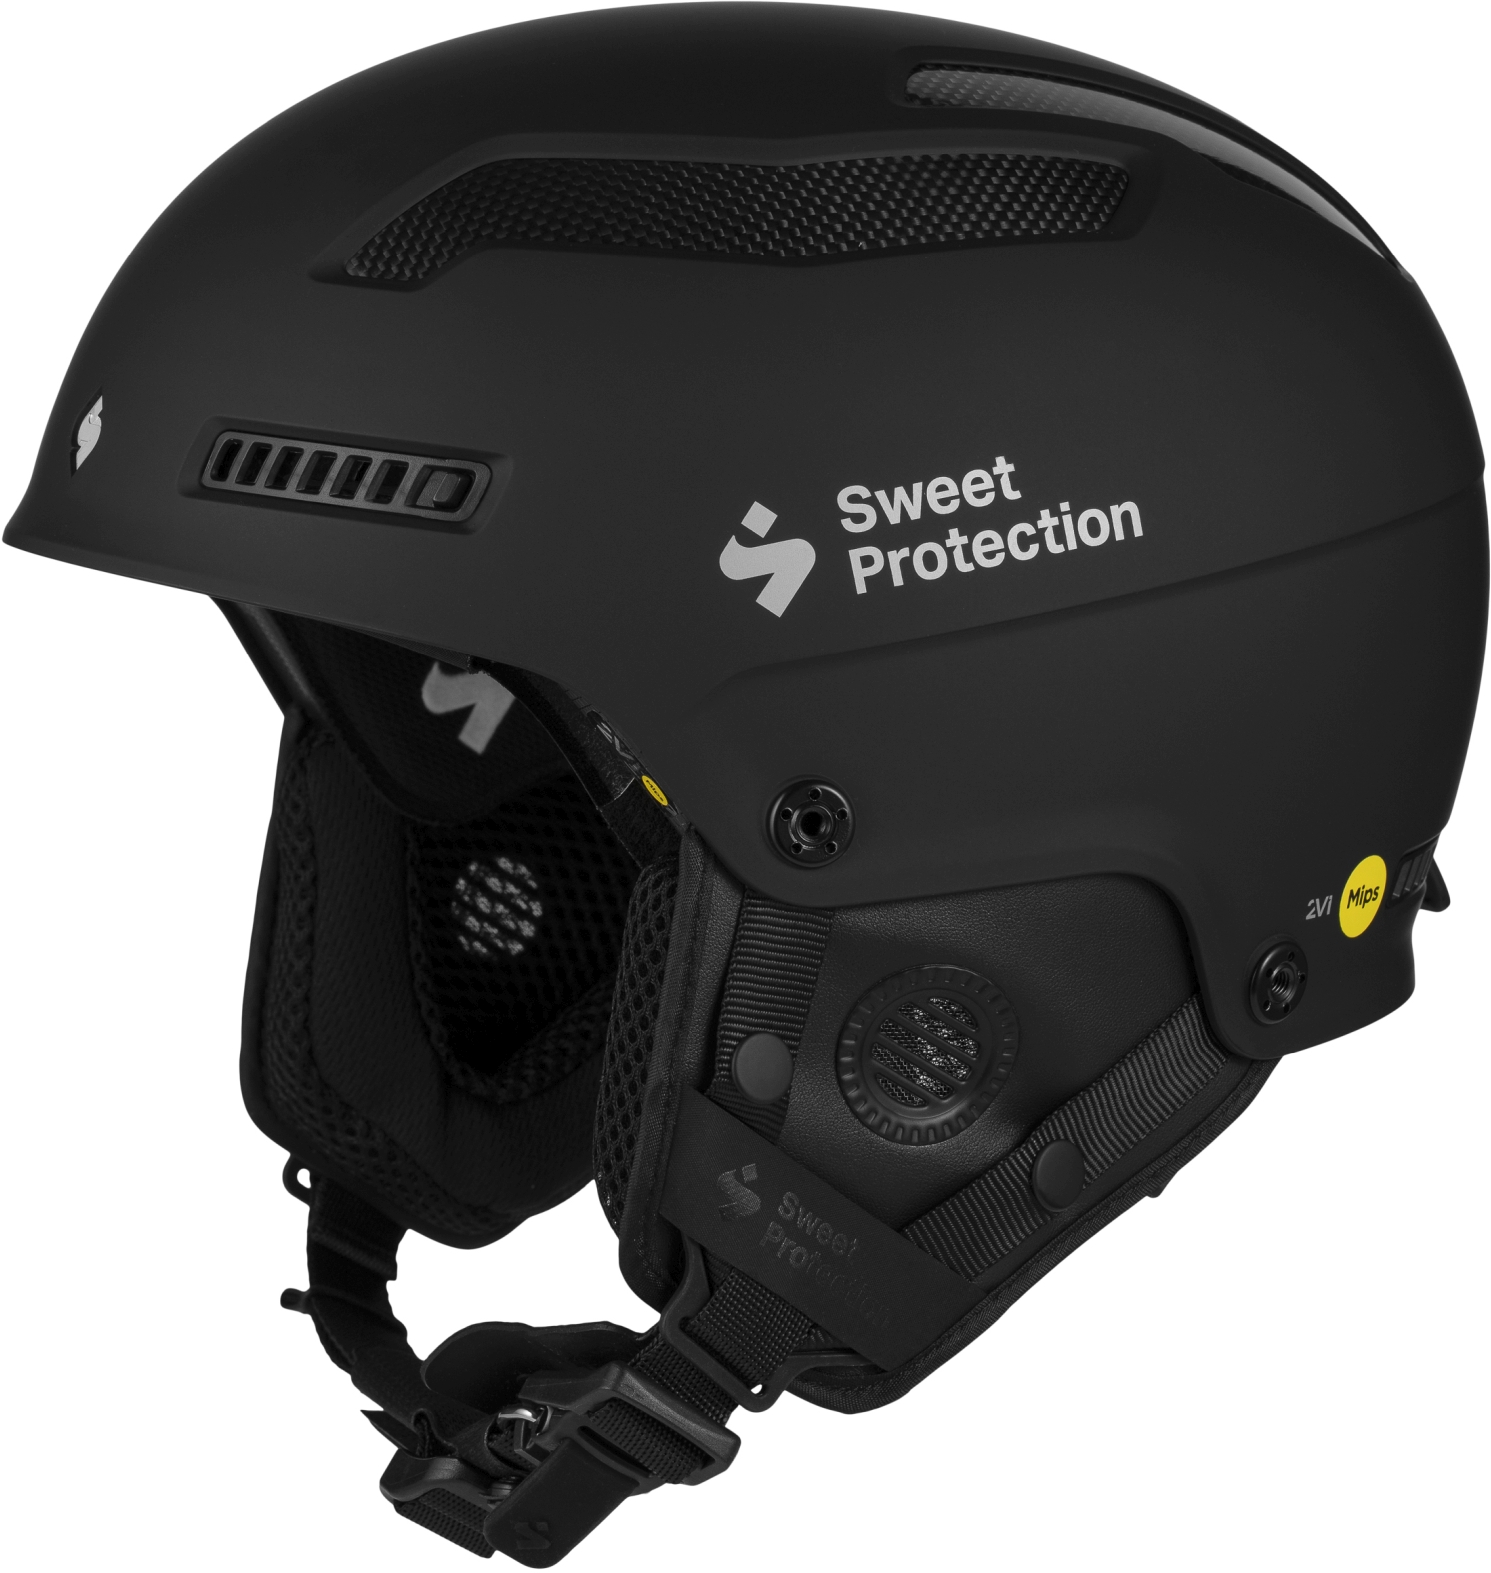 E-shop Sweet Protection Trooper 2Vi SL MIPS Helmet - Dirt Black 59-61